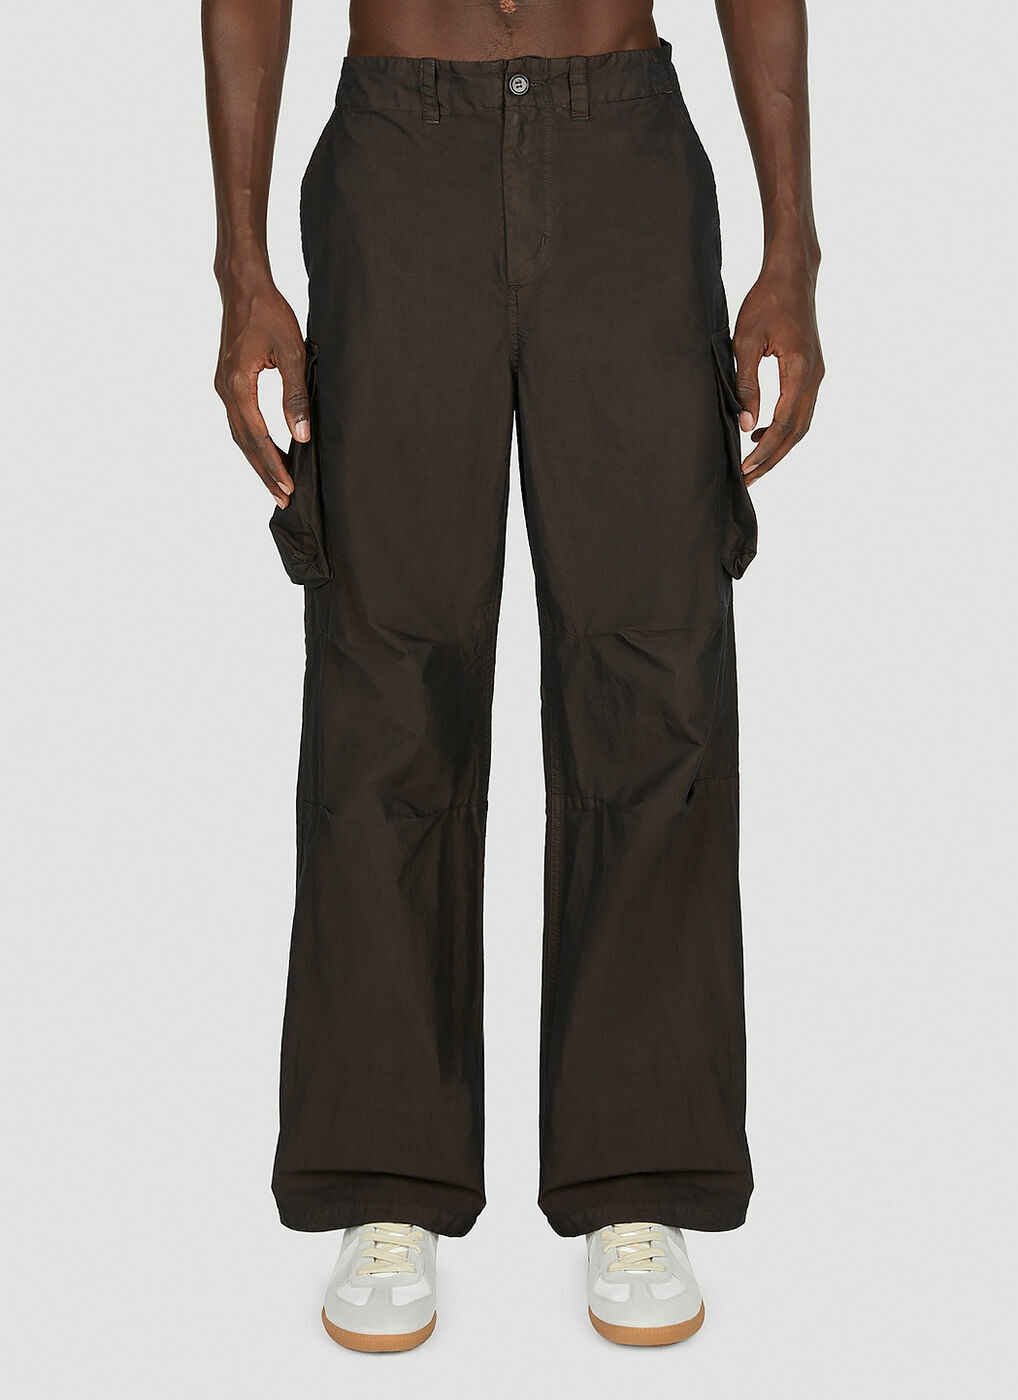 Brown Cargo pants | CFLNYCCO